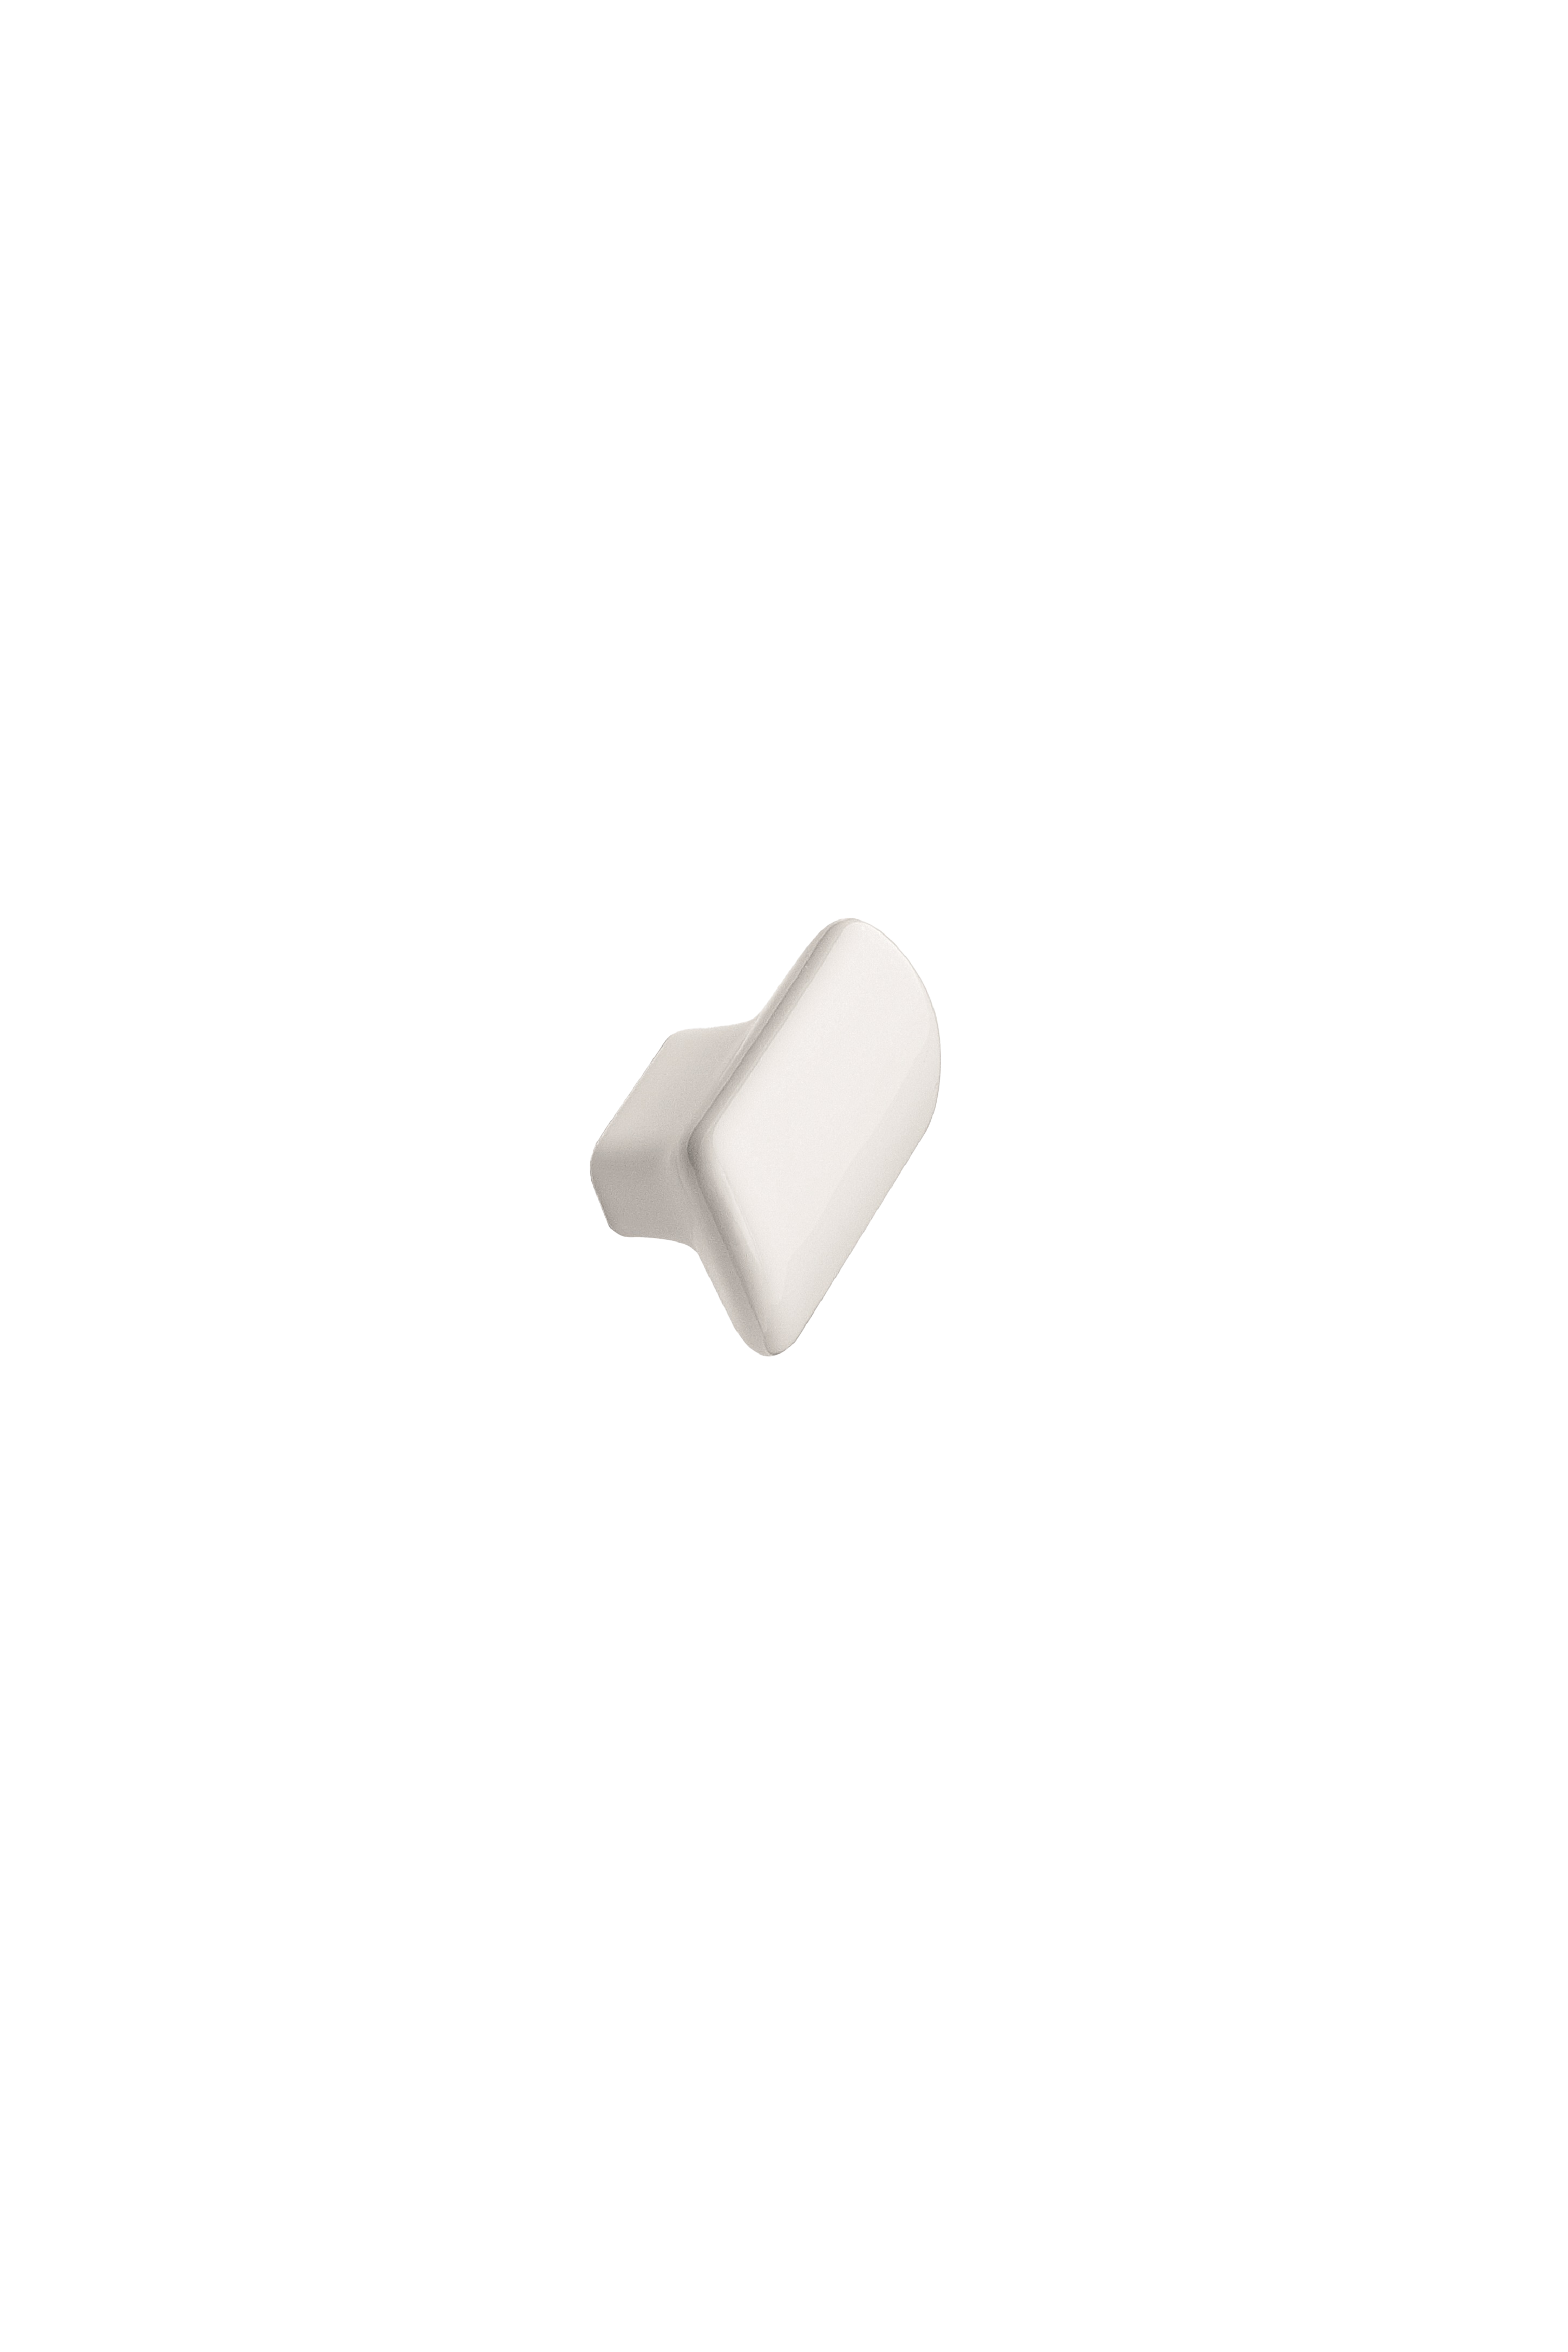 VANILLA knop, Keramik, hvid • Furnipart